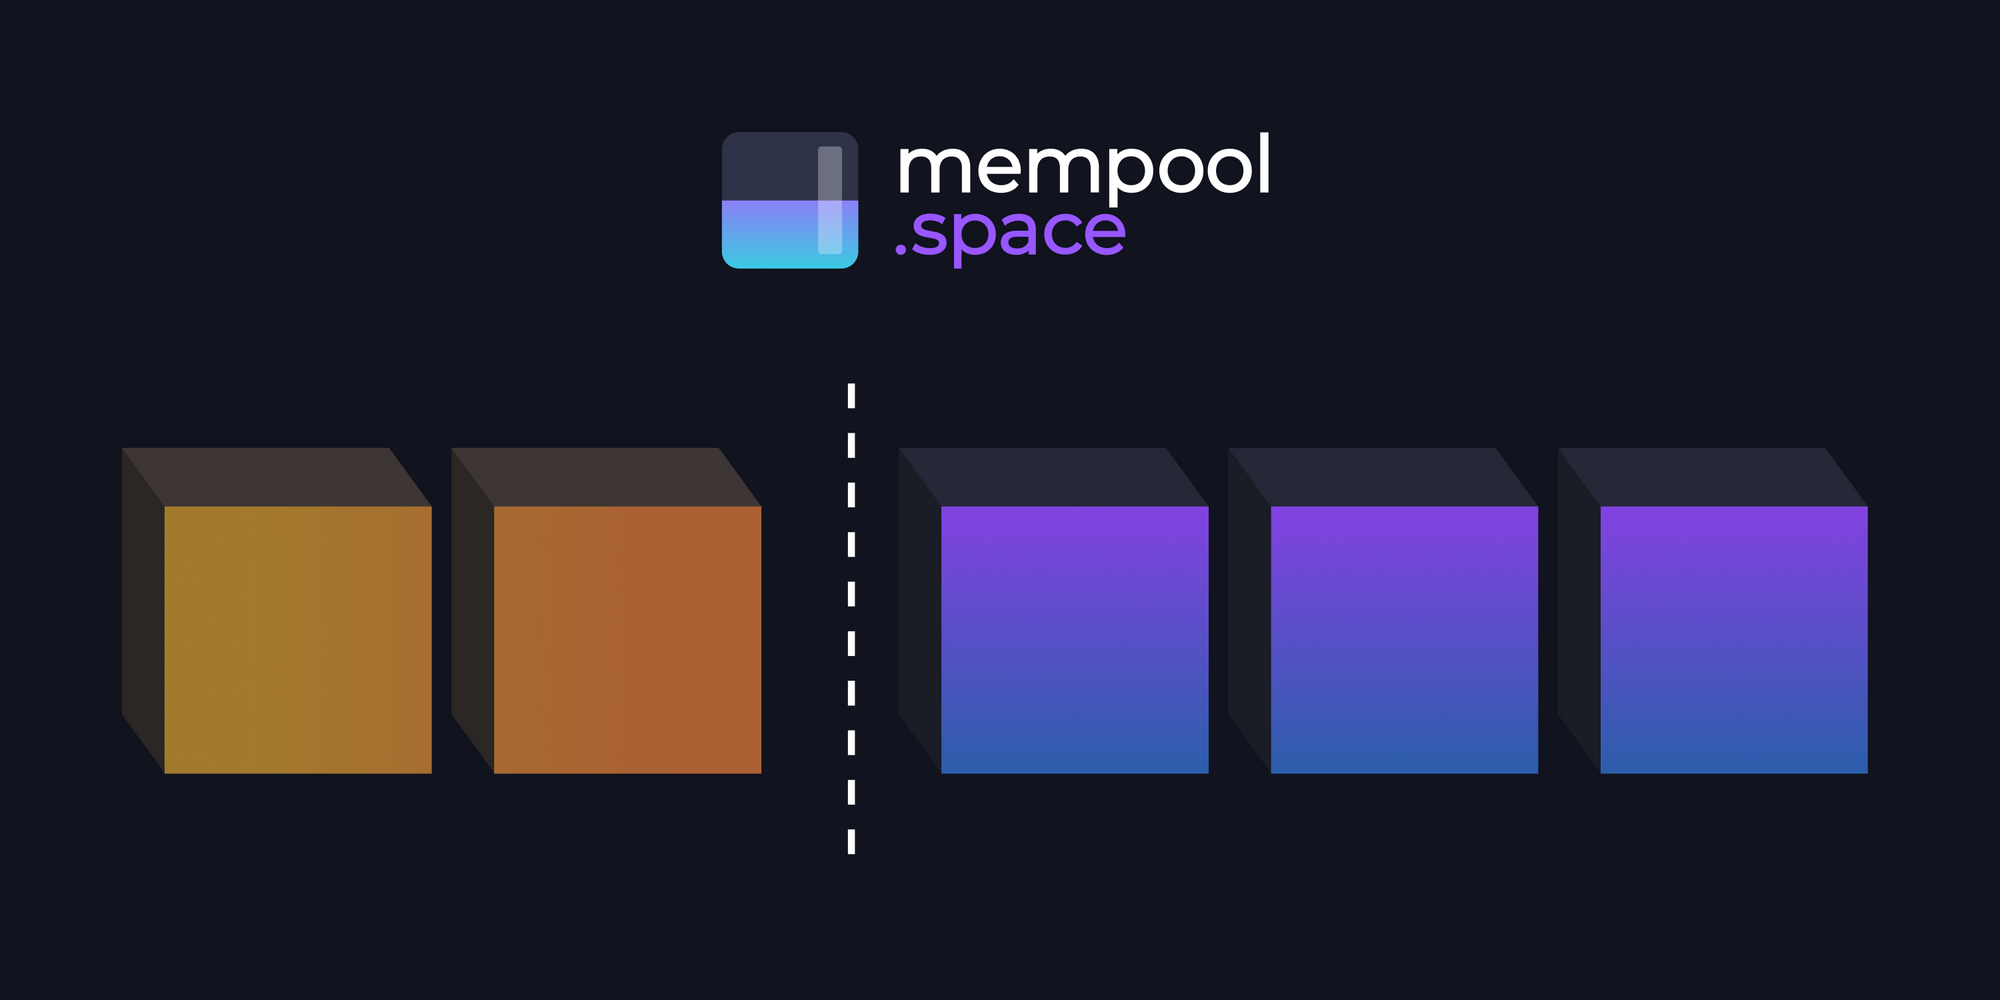 Next Block - mempool - Bitcoin Testnet